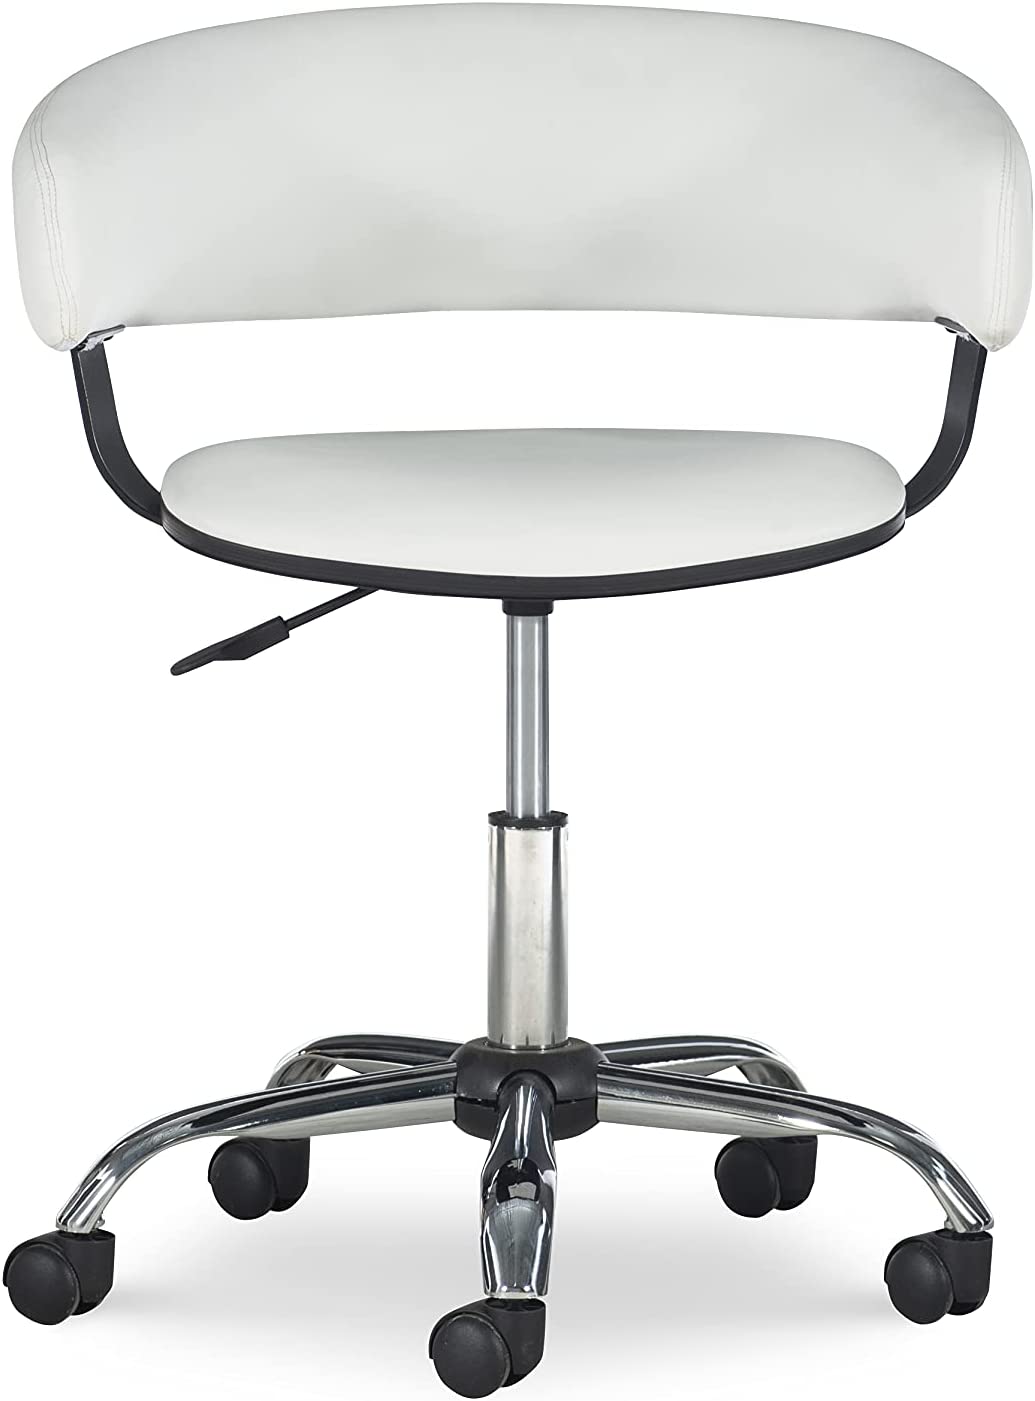 Powell Gas Lift Desk Chair, White